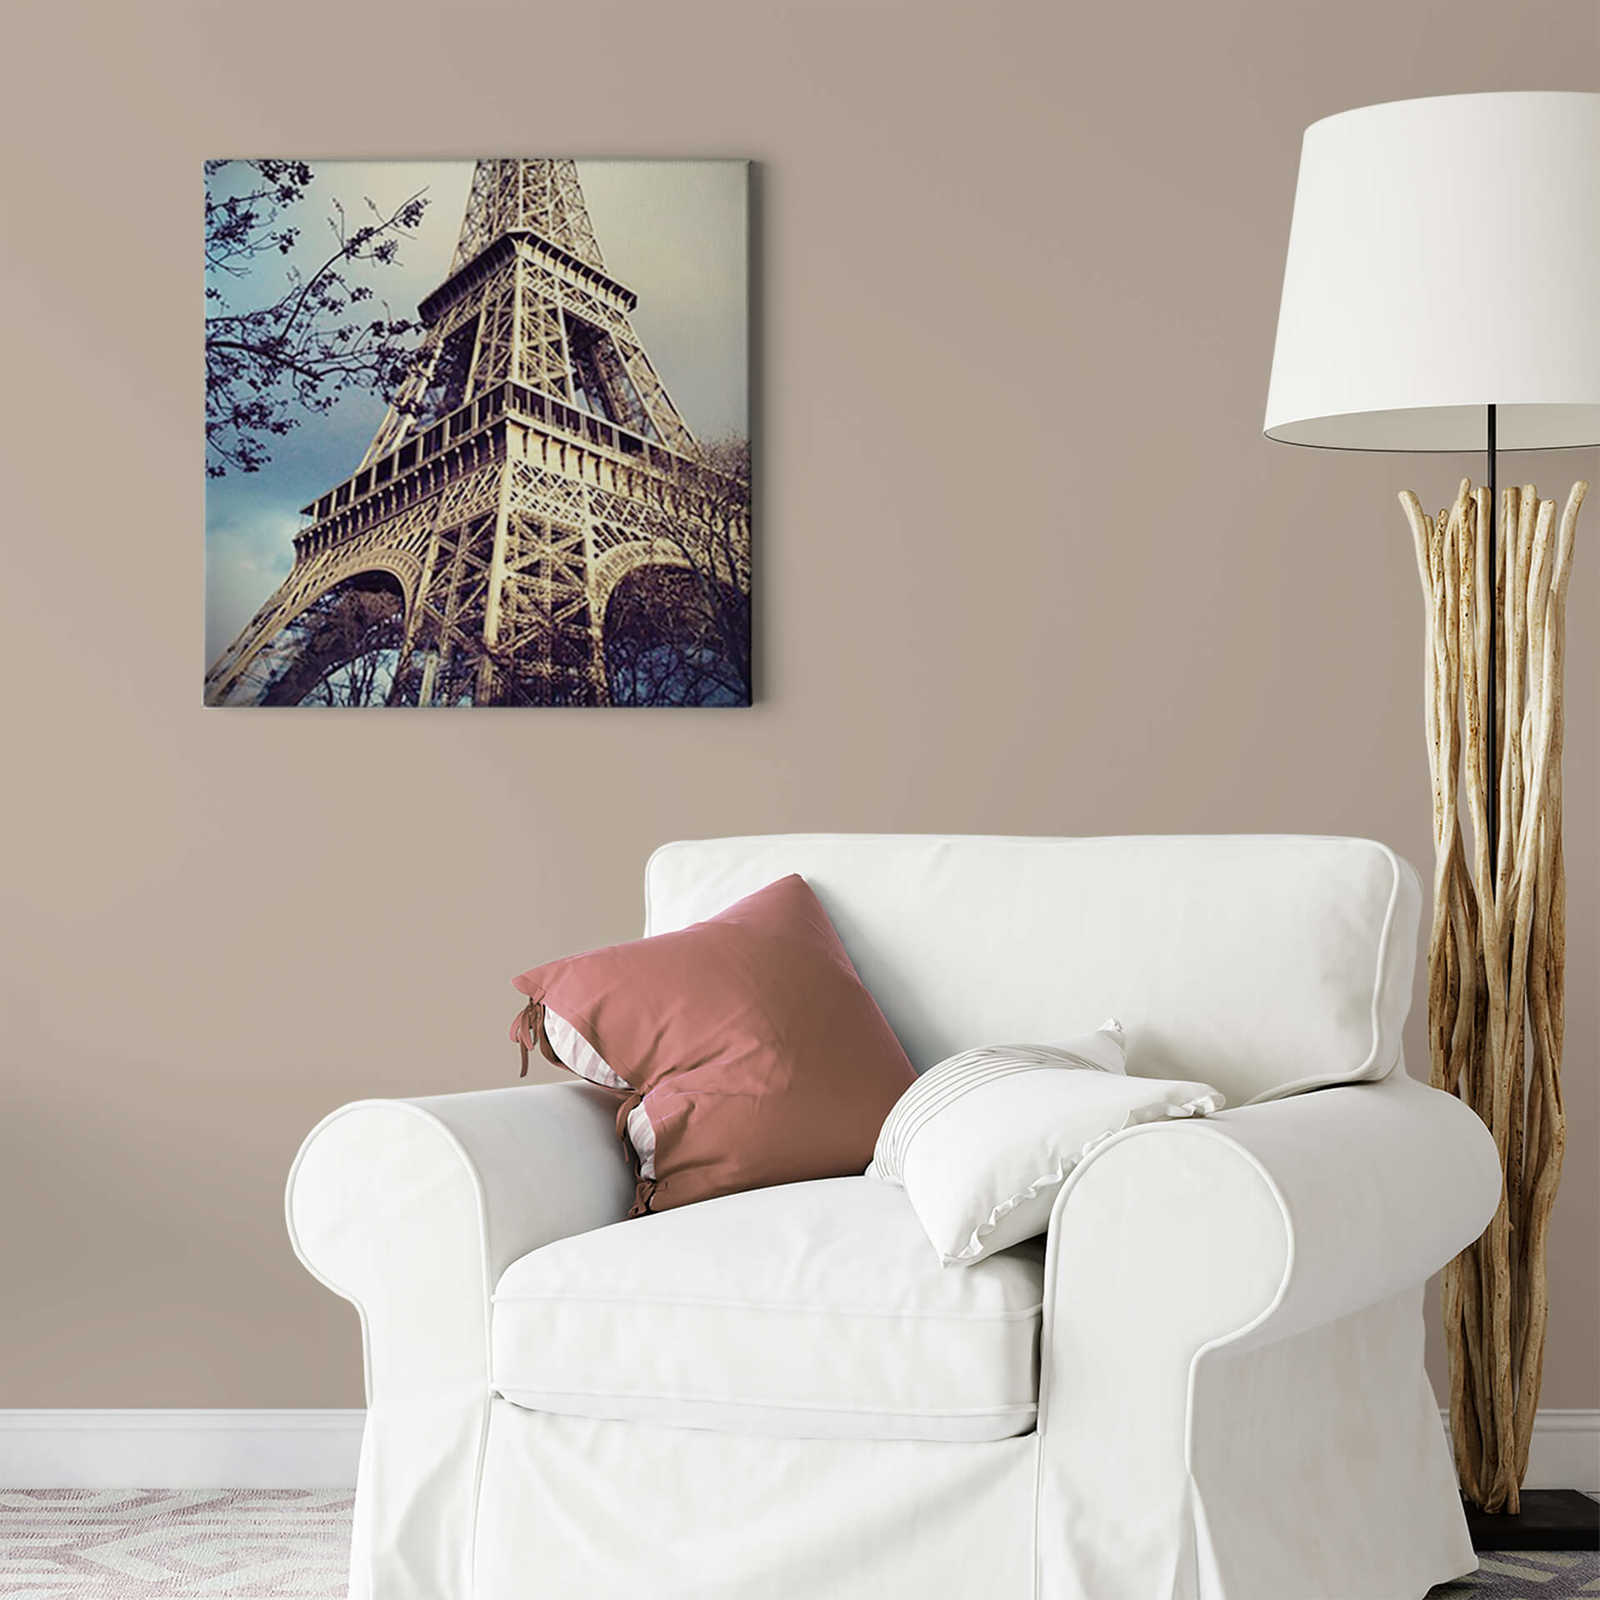             Square canvas print Eiffel Tower picture
        